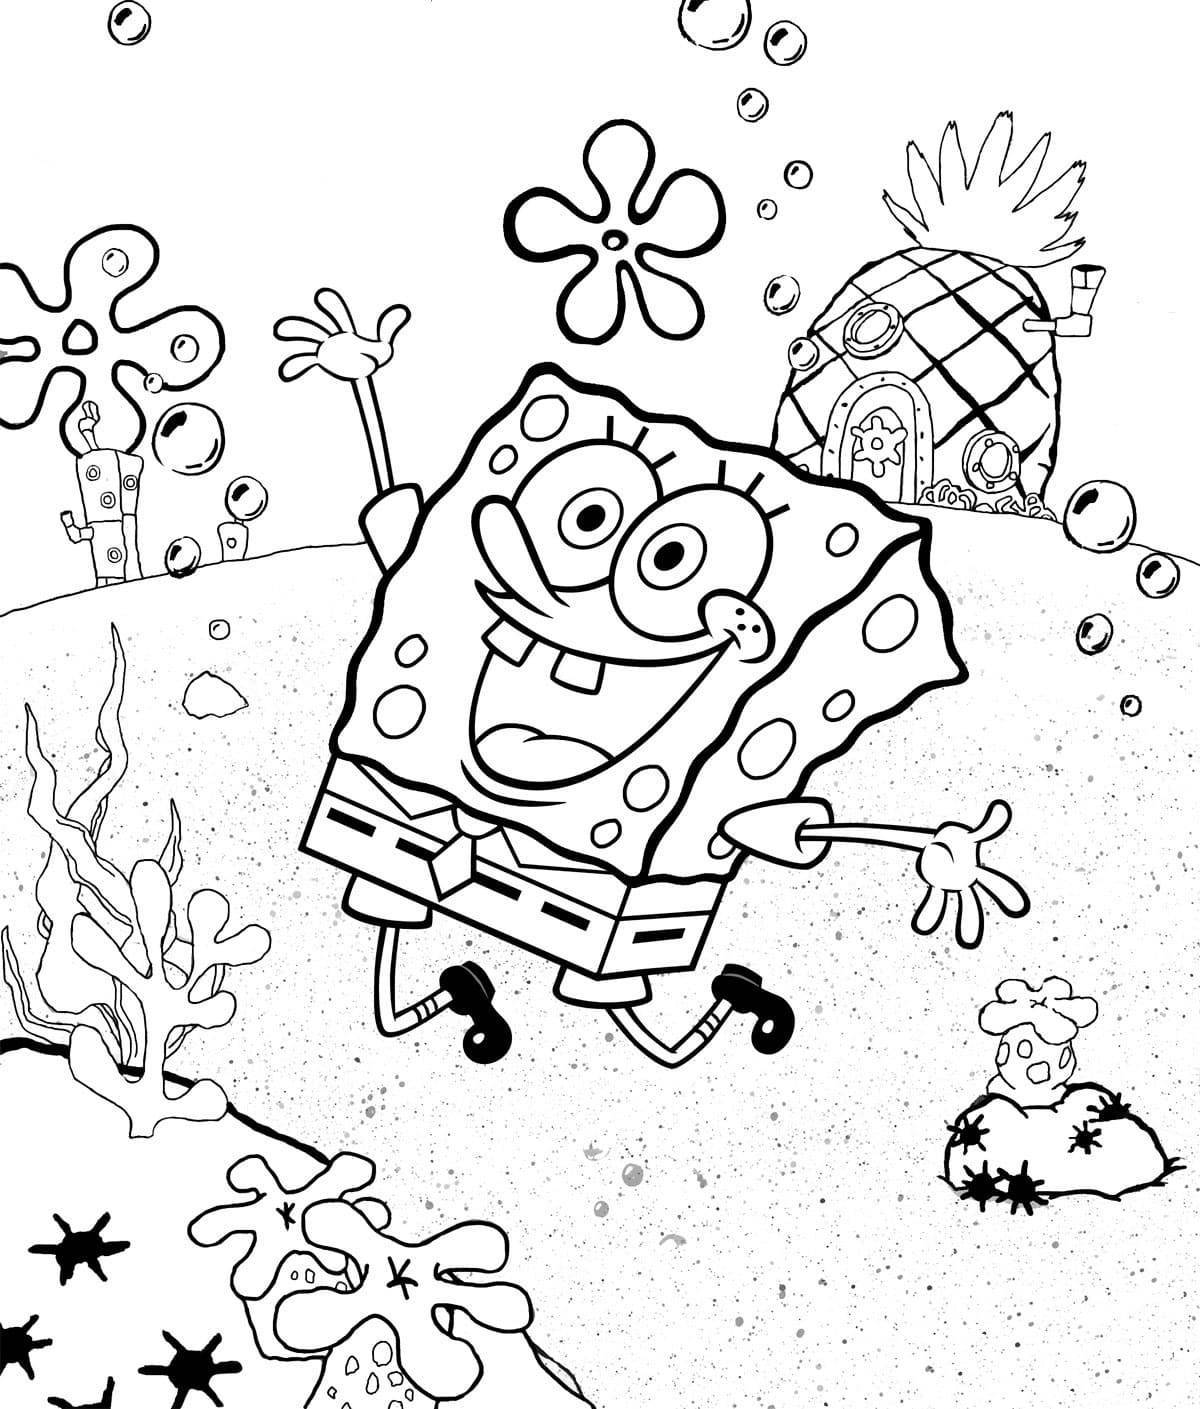 Sponge bob for kids #2